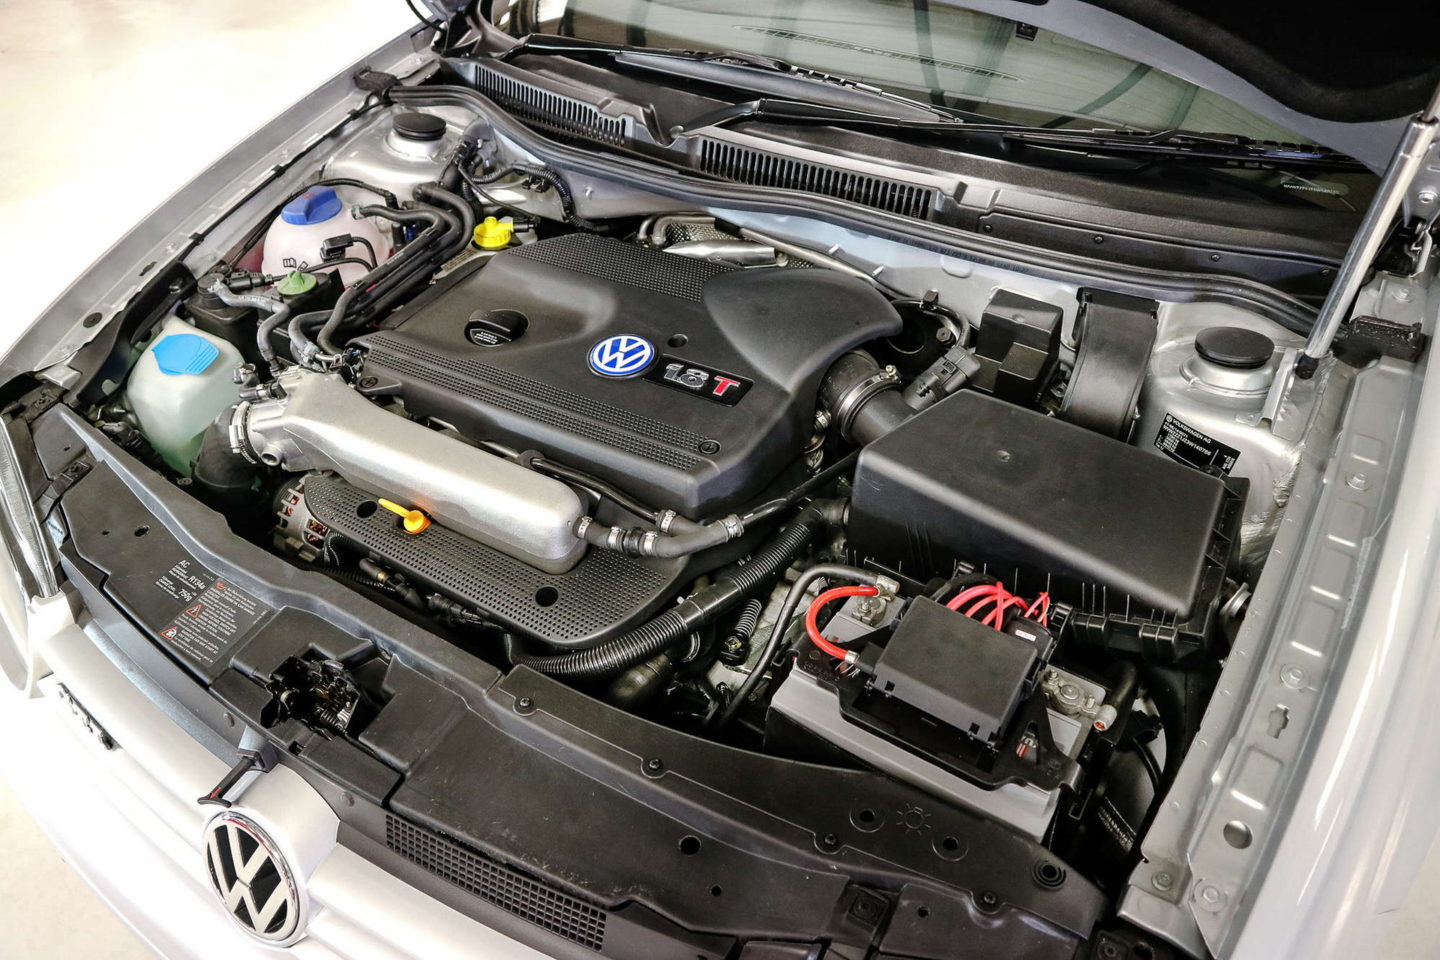 VW Golf GTI mk4 motor